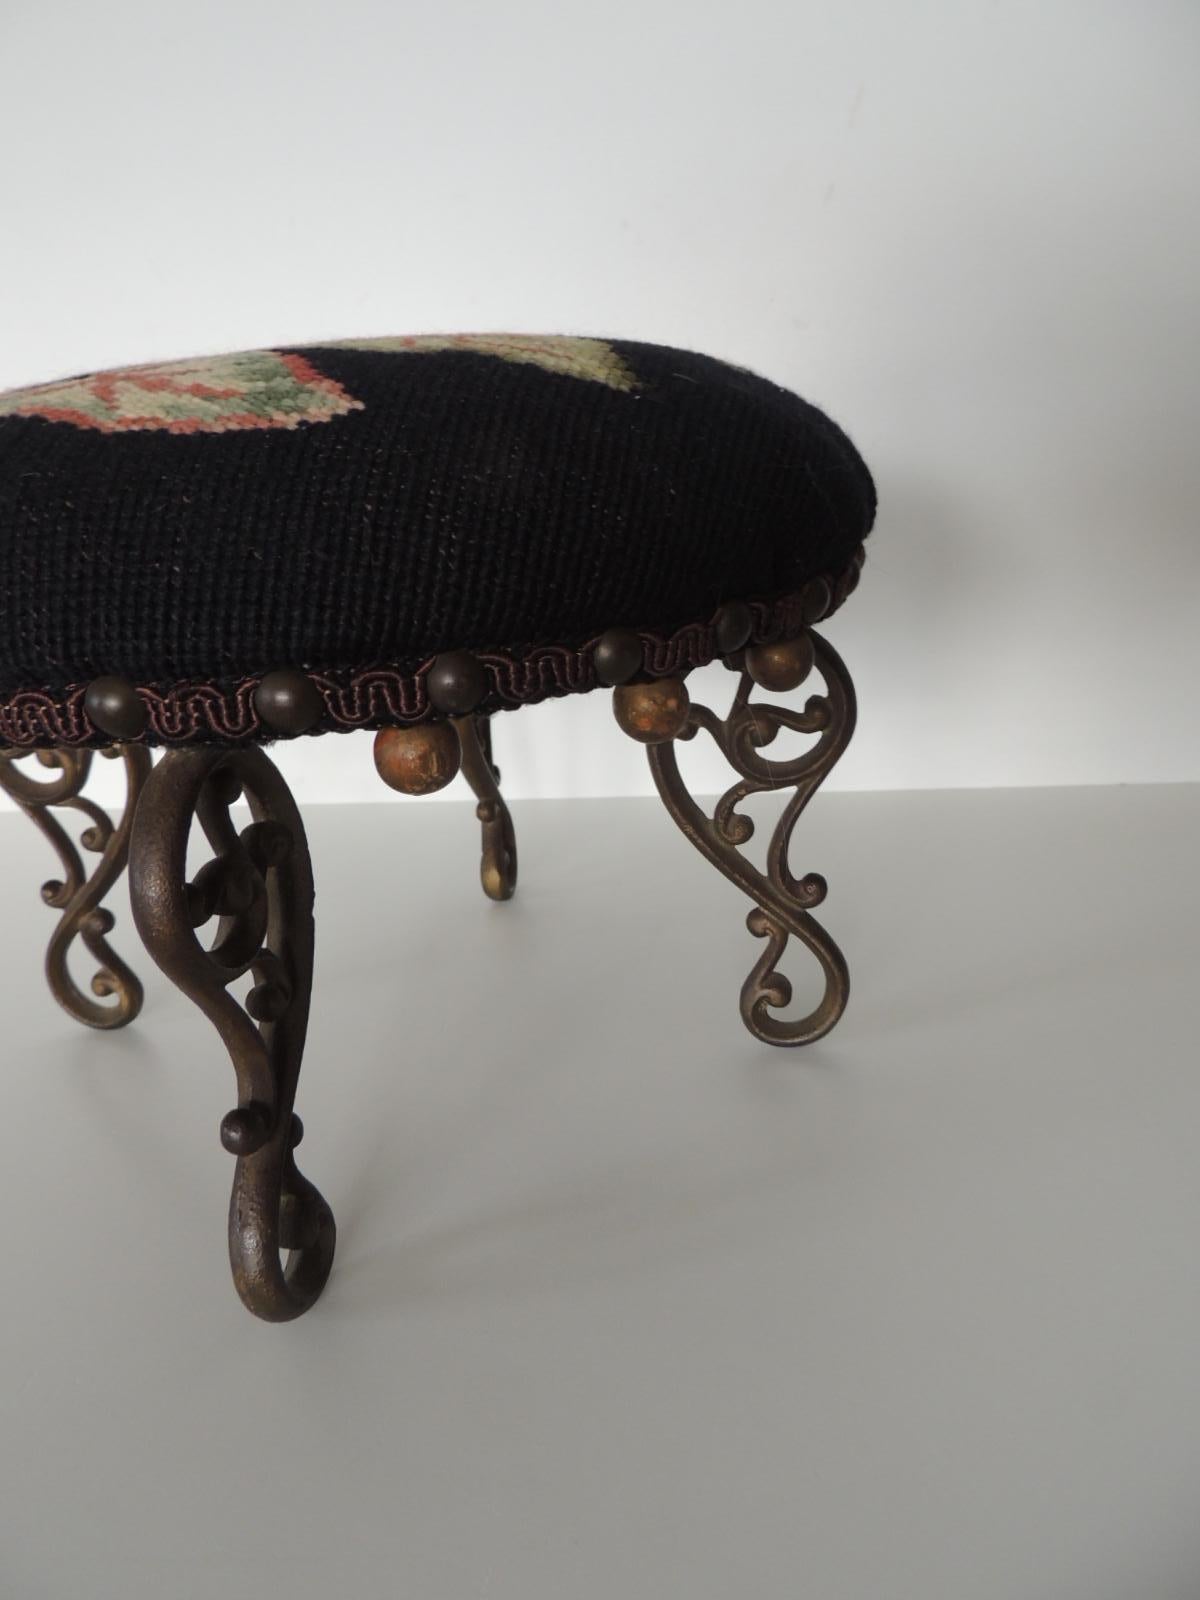 Ecuadorean Vintage Round Caladium Leaves Tapestry Footstool with Brass Legs